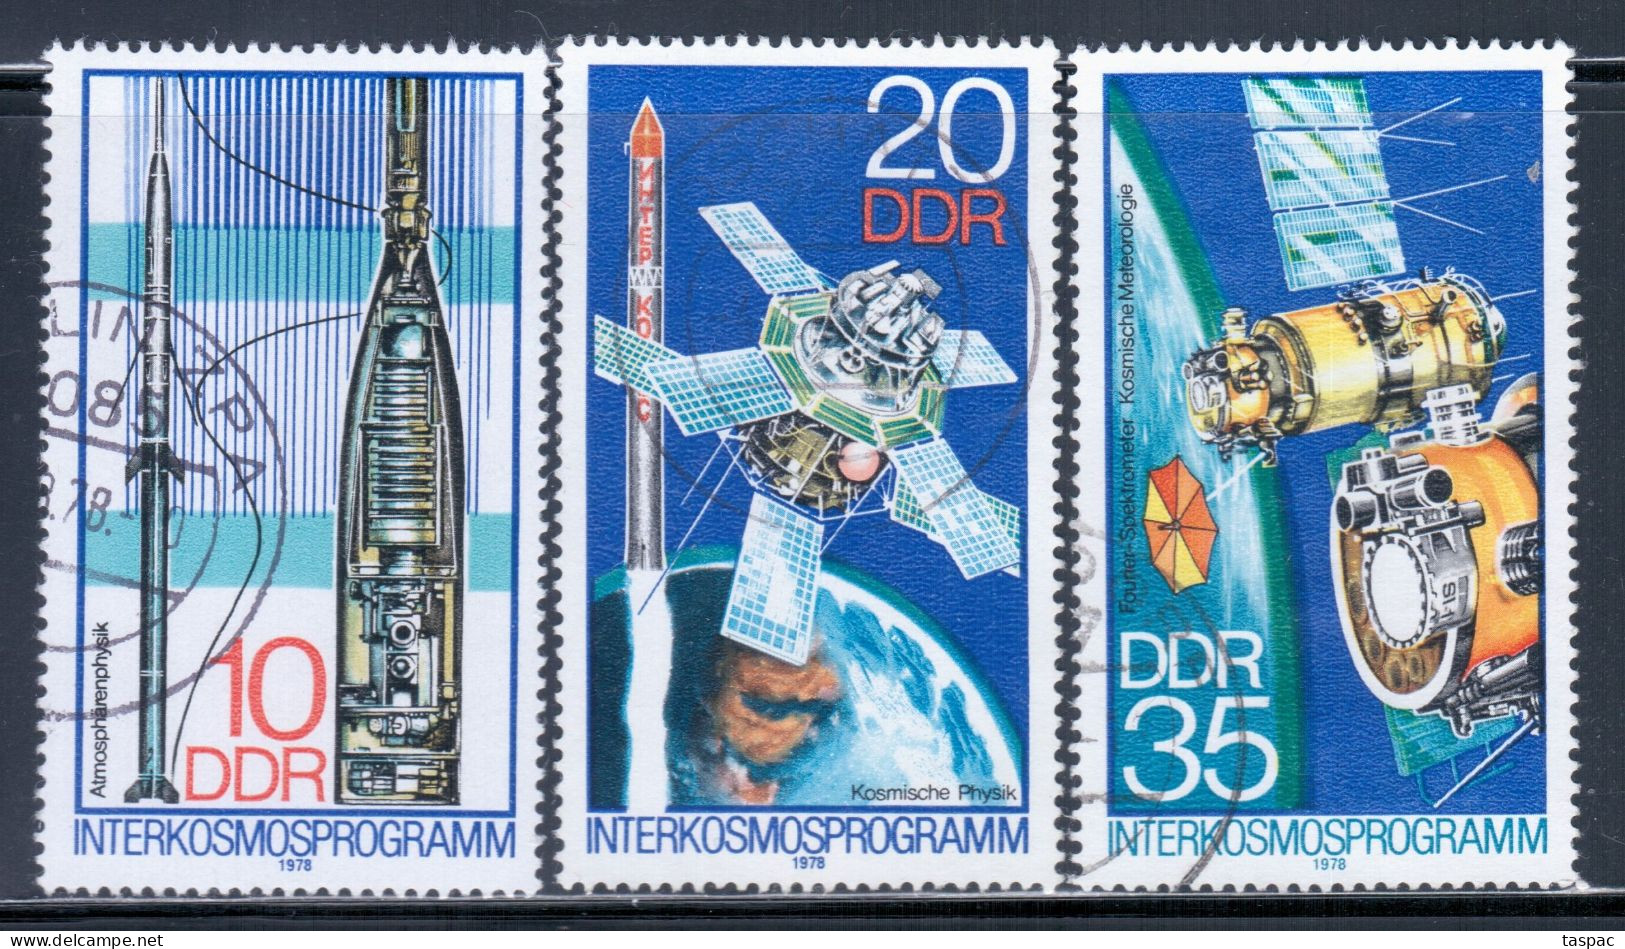 East Germany / DDR 1978 Mi# 2310-2312 Used - Intercosmos / Space - Europa